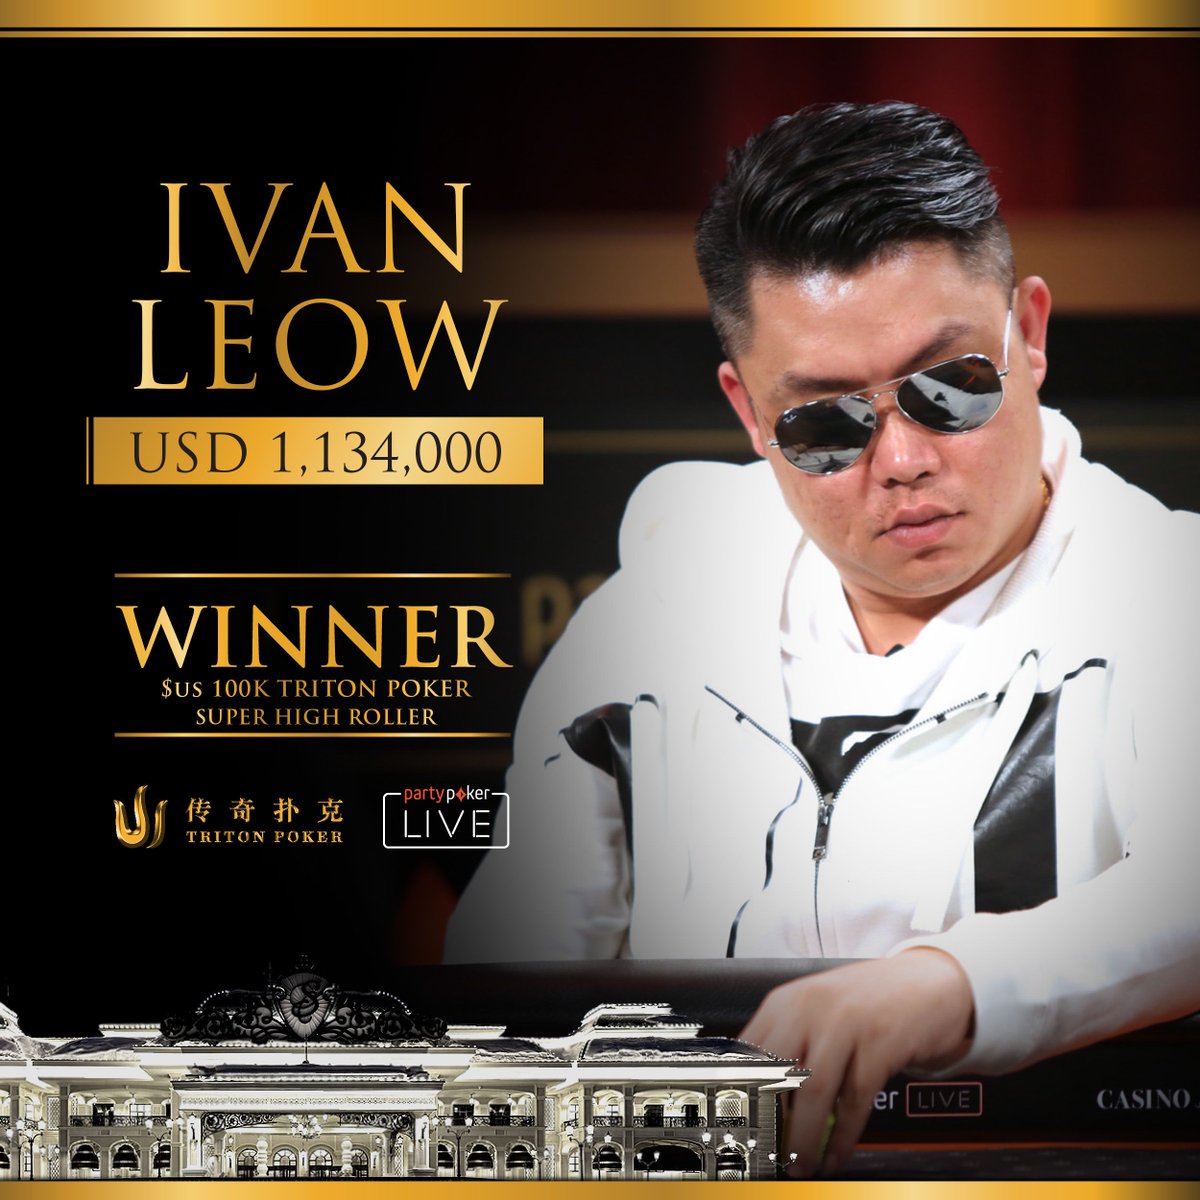 Ivan Leow Wins Triton Poker Super High Roller in Sochi for $1.1 Million